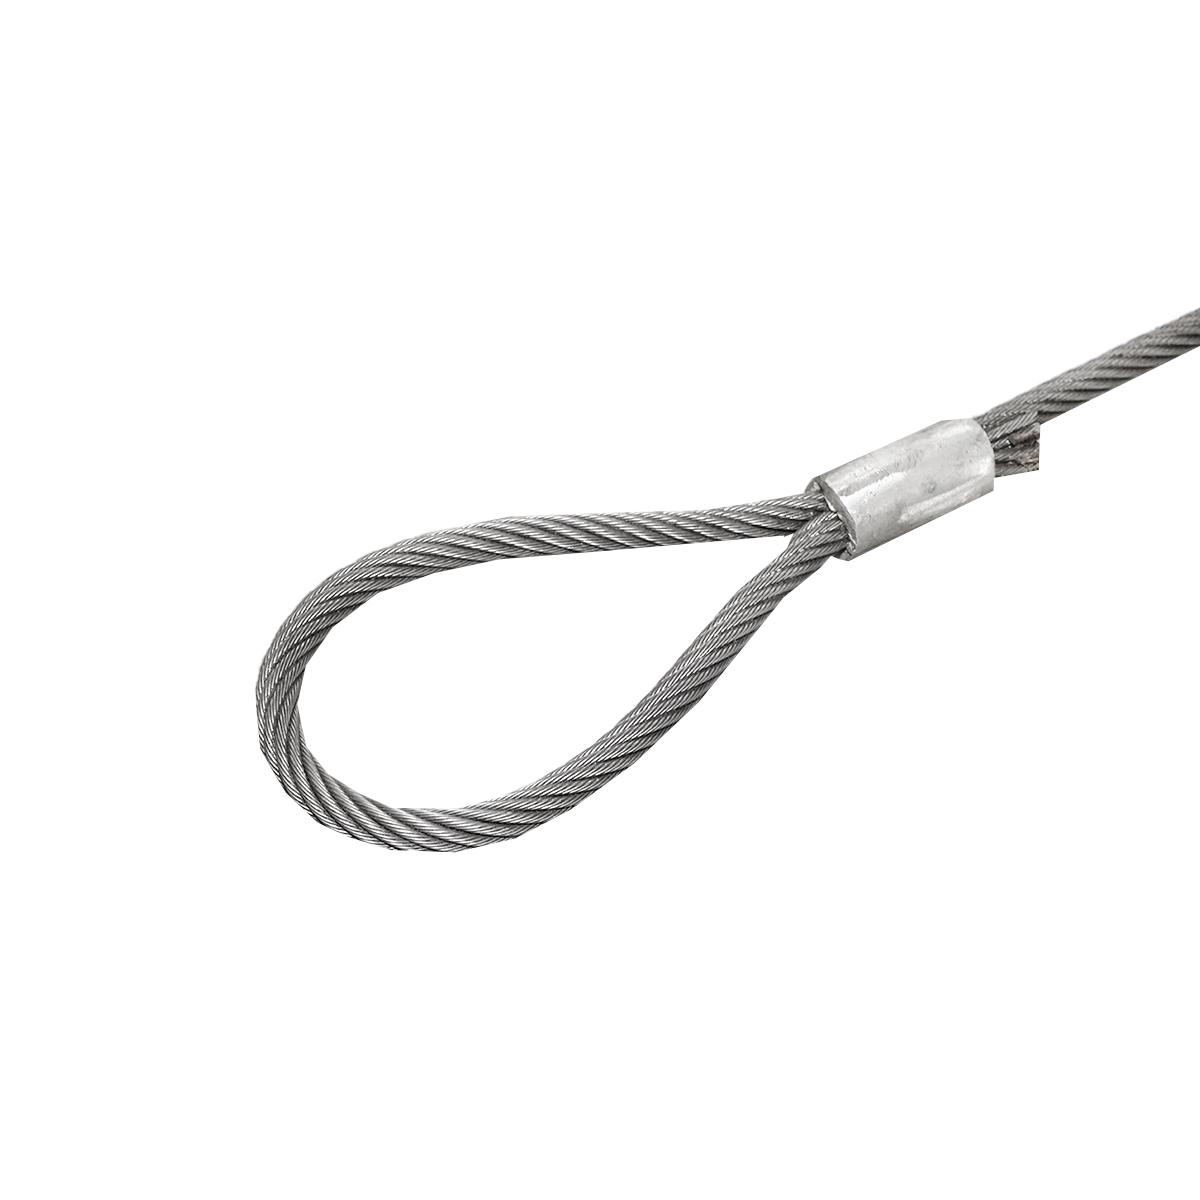 Cablu/sufa troliu din otel cu grosime de 16mm si lungime de 1m cu inele pentru tractat sau ridicat